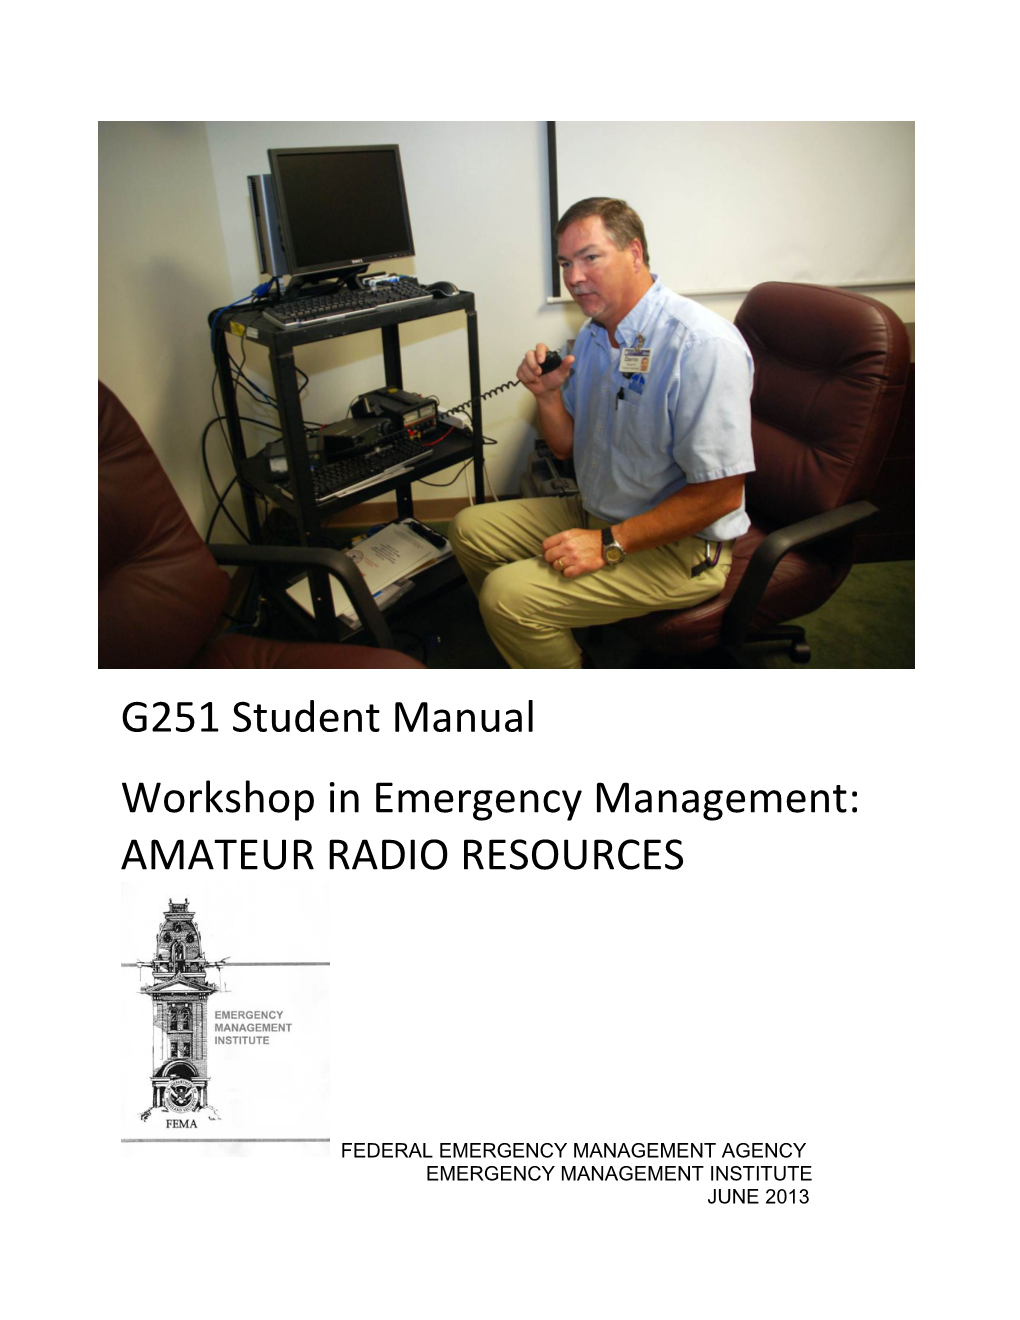 G251 Amateur Radio Resources